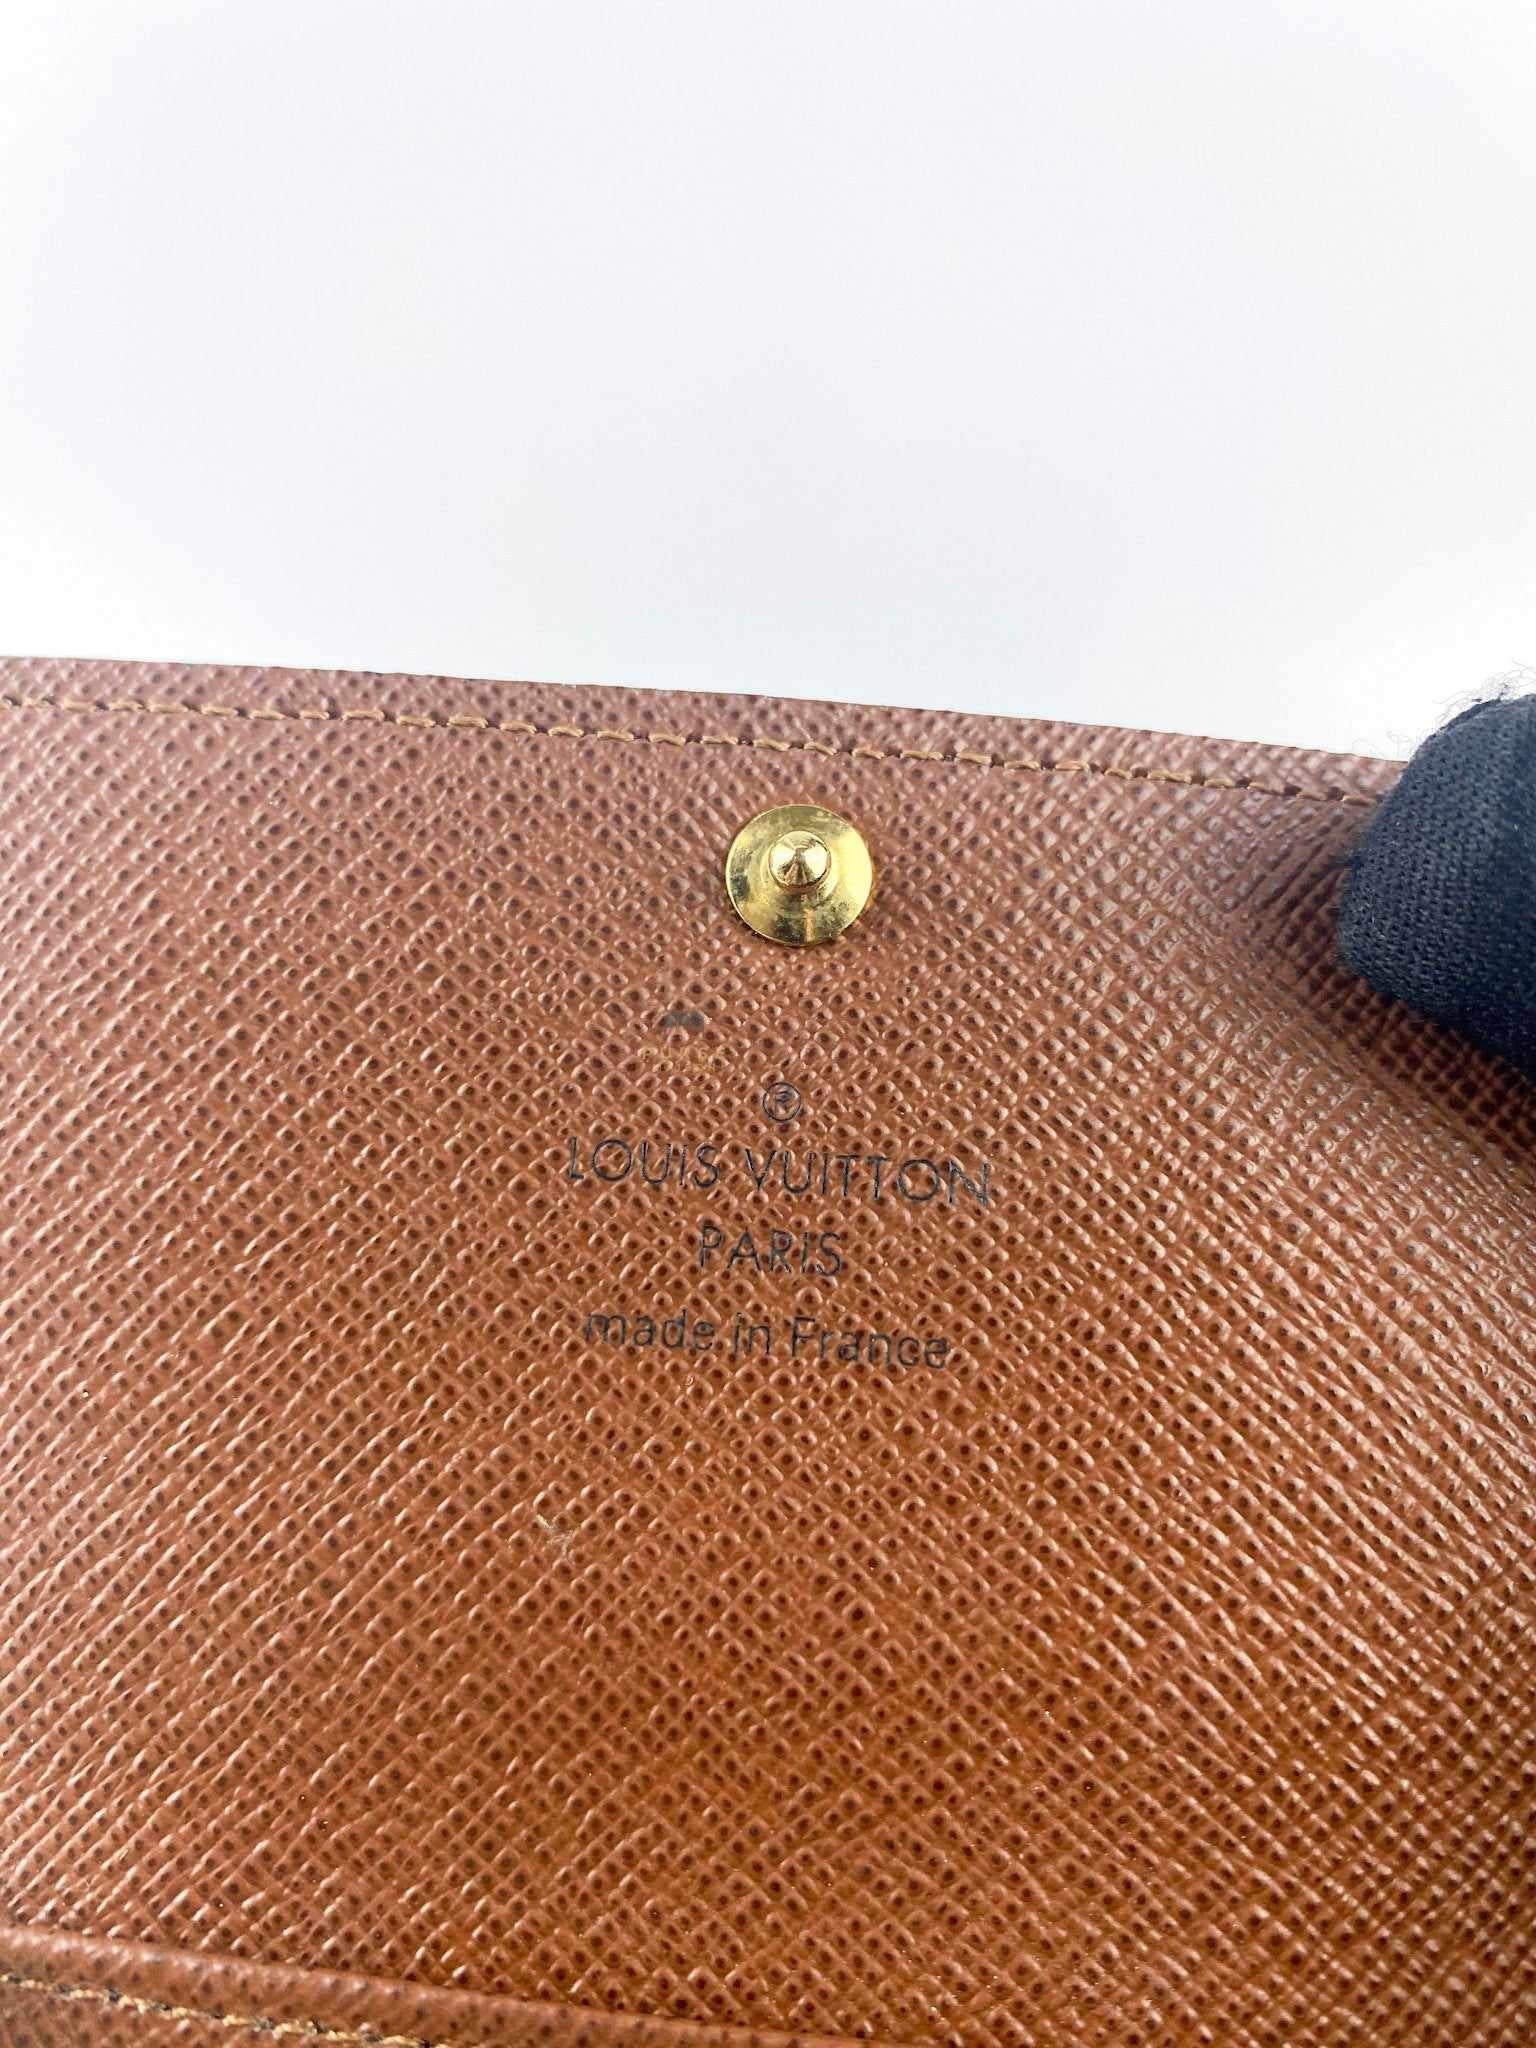 6 Key Holder Monogram Vernis Leather - Personalisation M90900